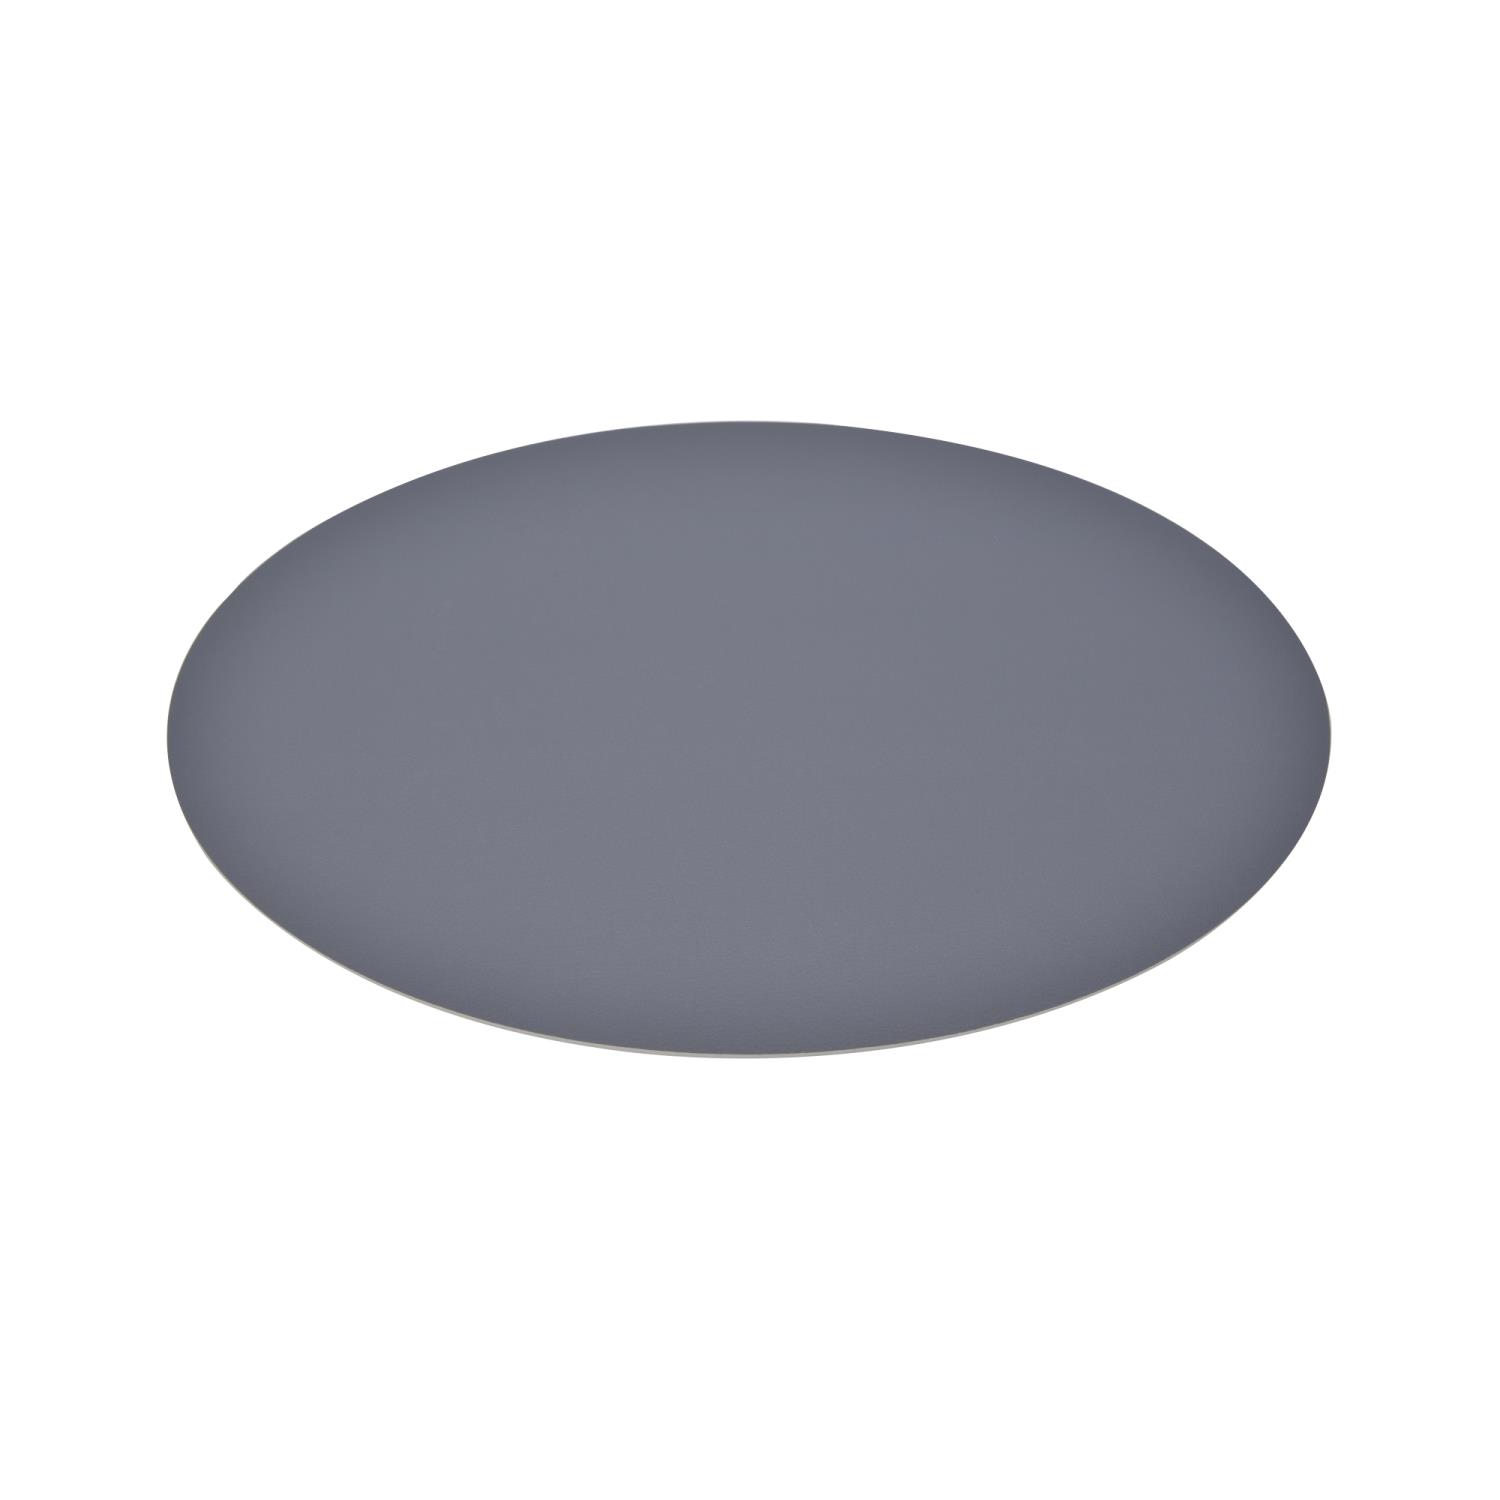 Spisebrikke West mørk grå 43,5x28,5 cm oval